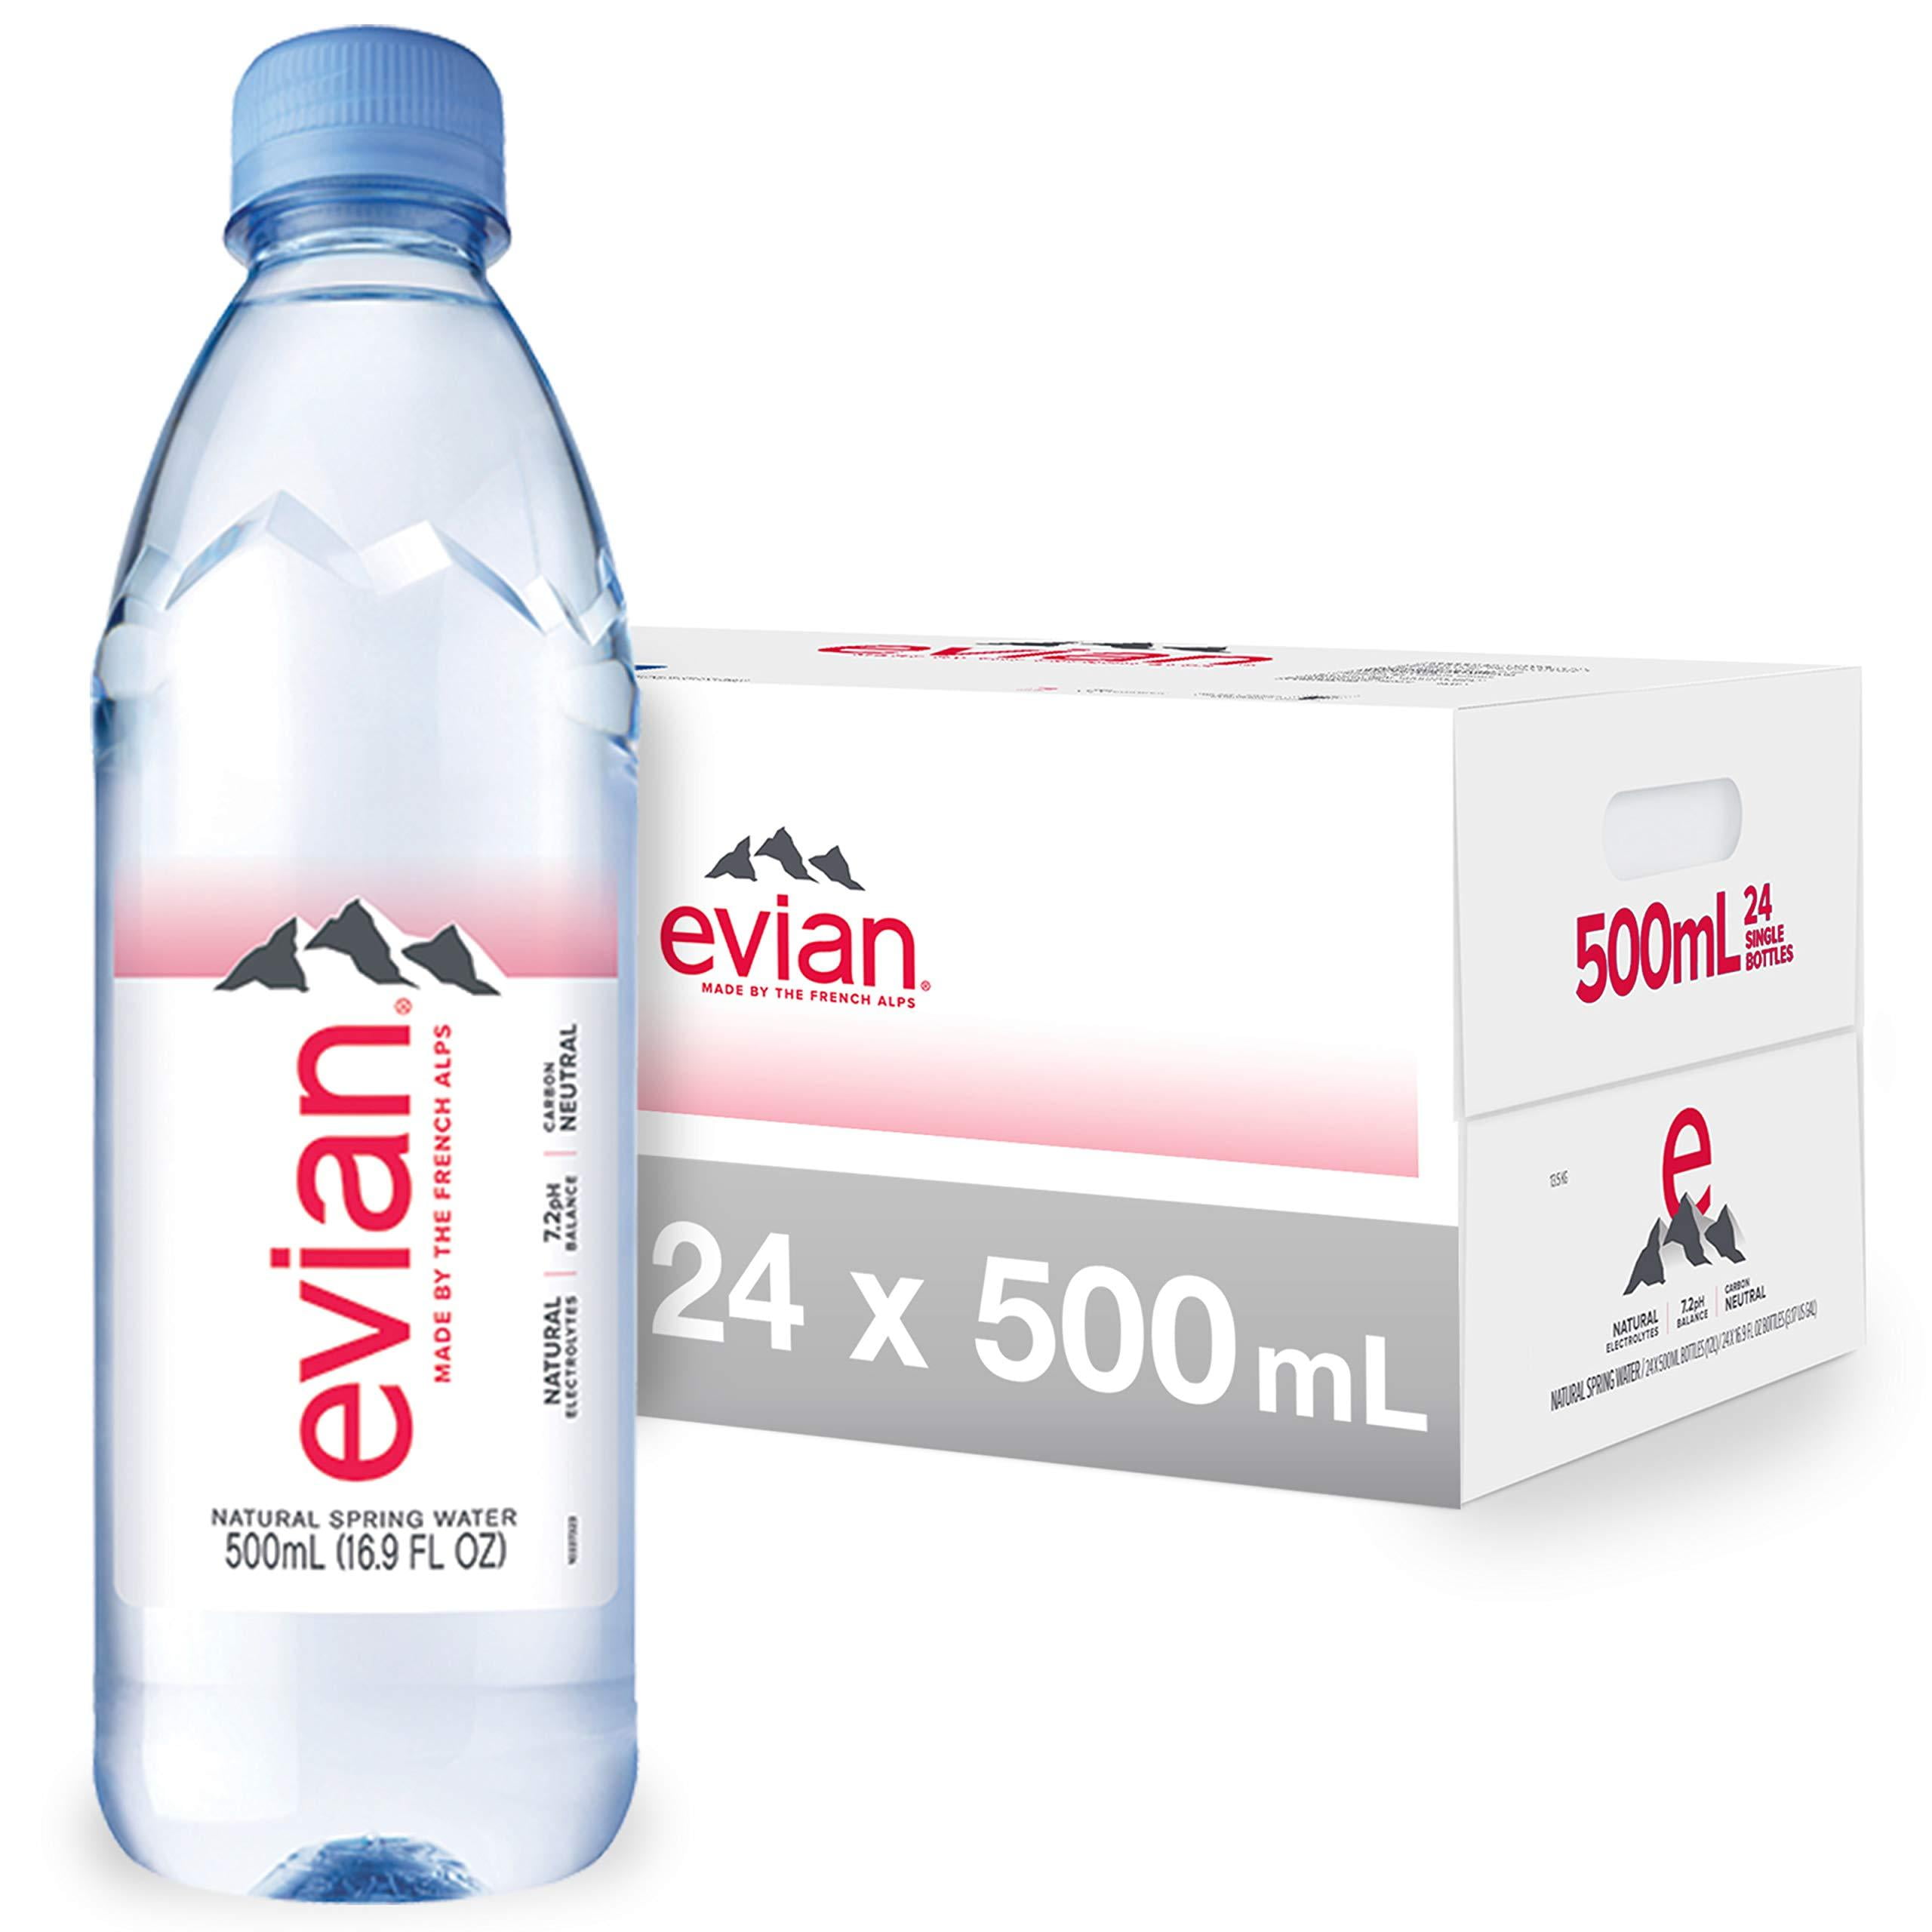 FIJI Natural Artesian Bottled Water 500 mL / 16.9 Fl Ounce (Pack of 24)